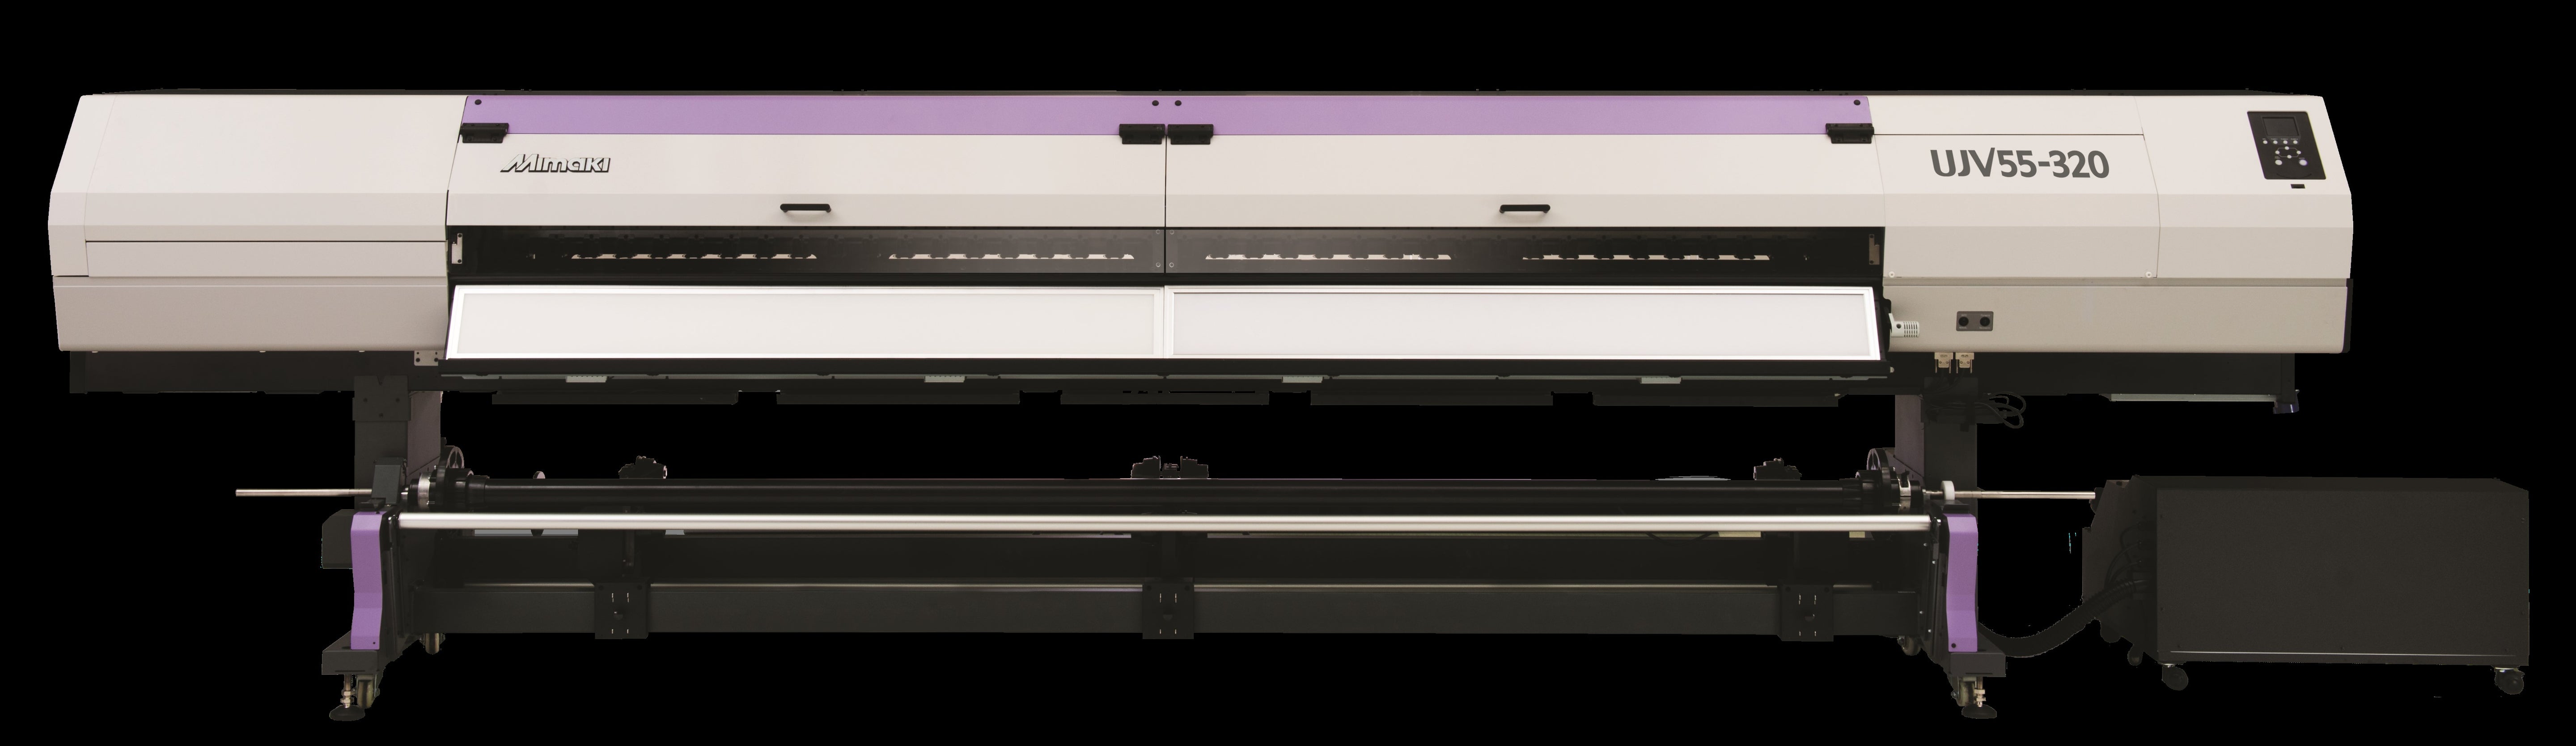 Mimaki UJV55-320 Roll-To-Roll UV Printer - 0